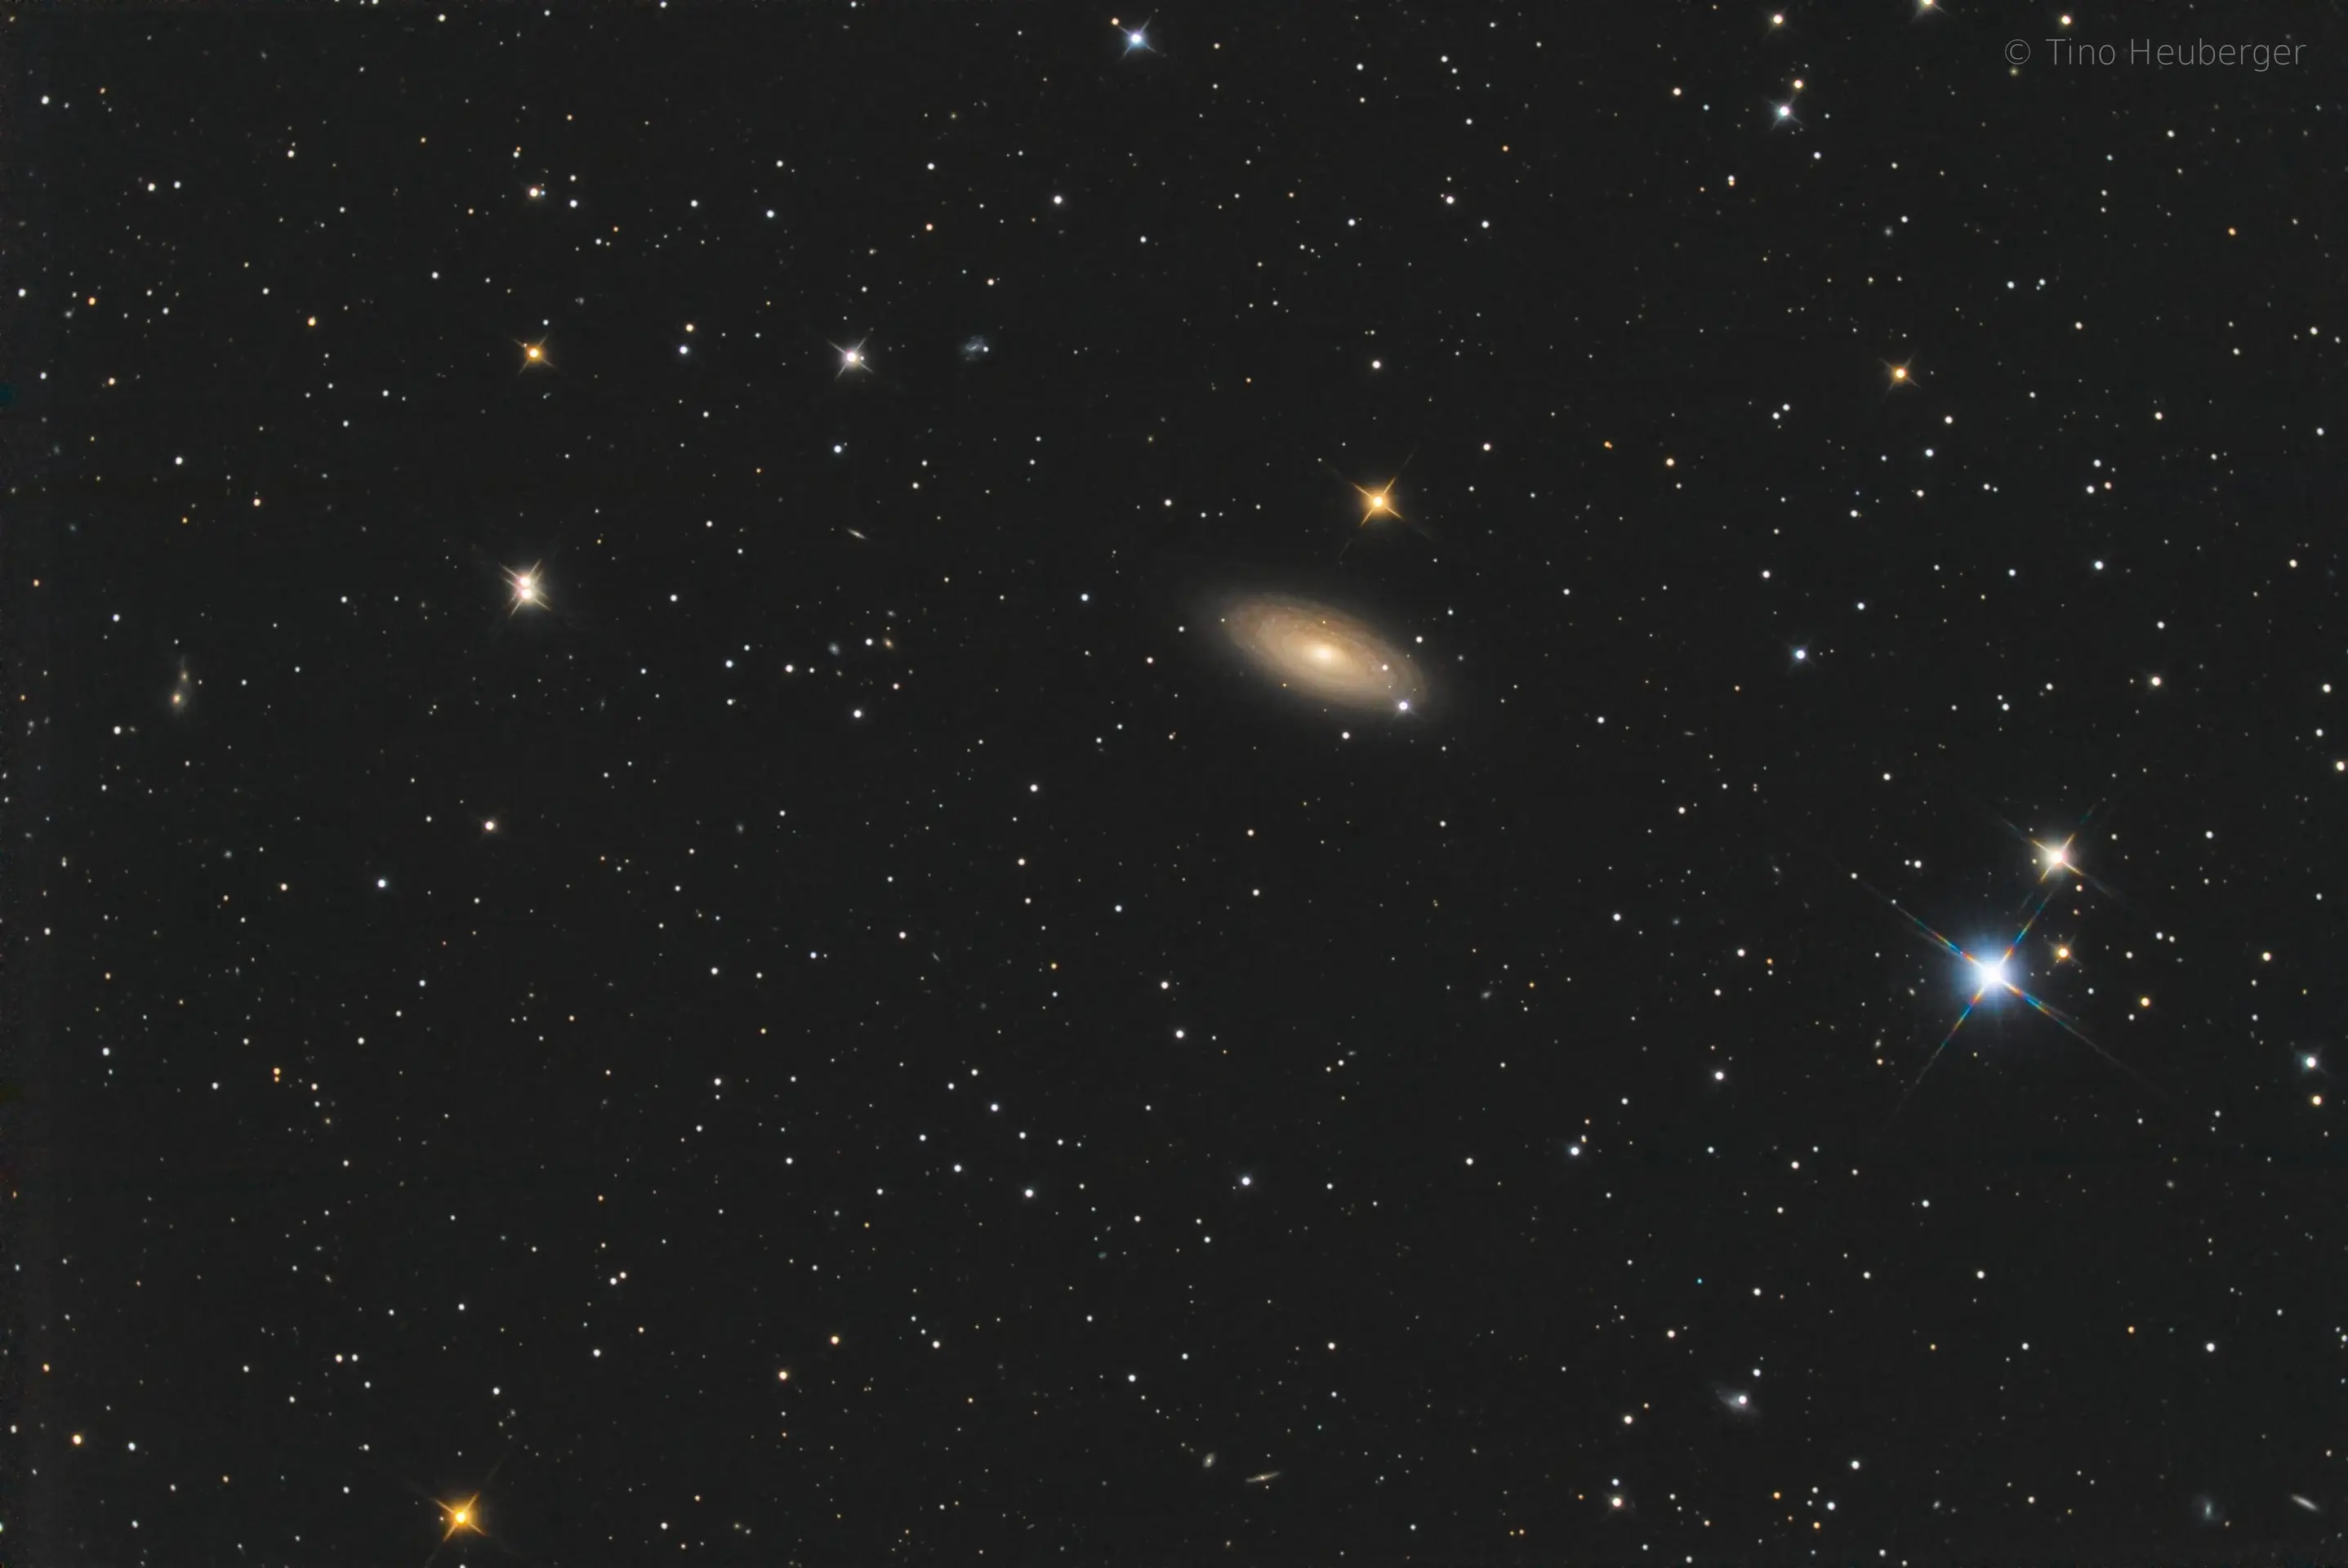 NGC2841: An unbarred spiral galaxy